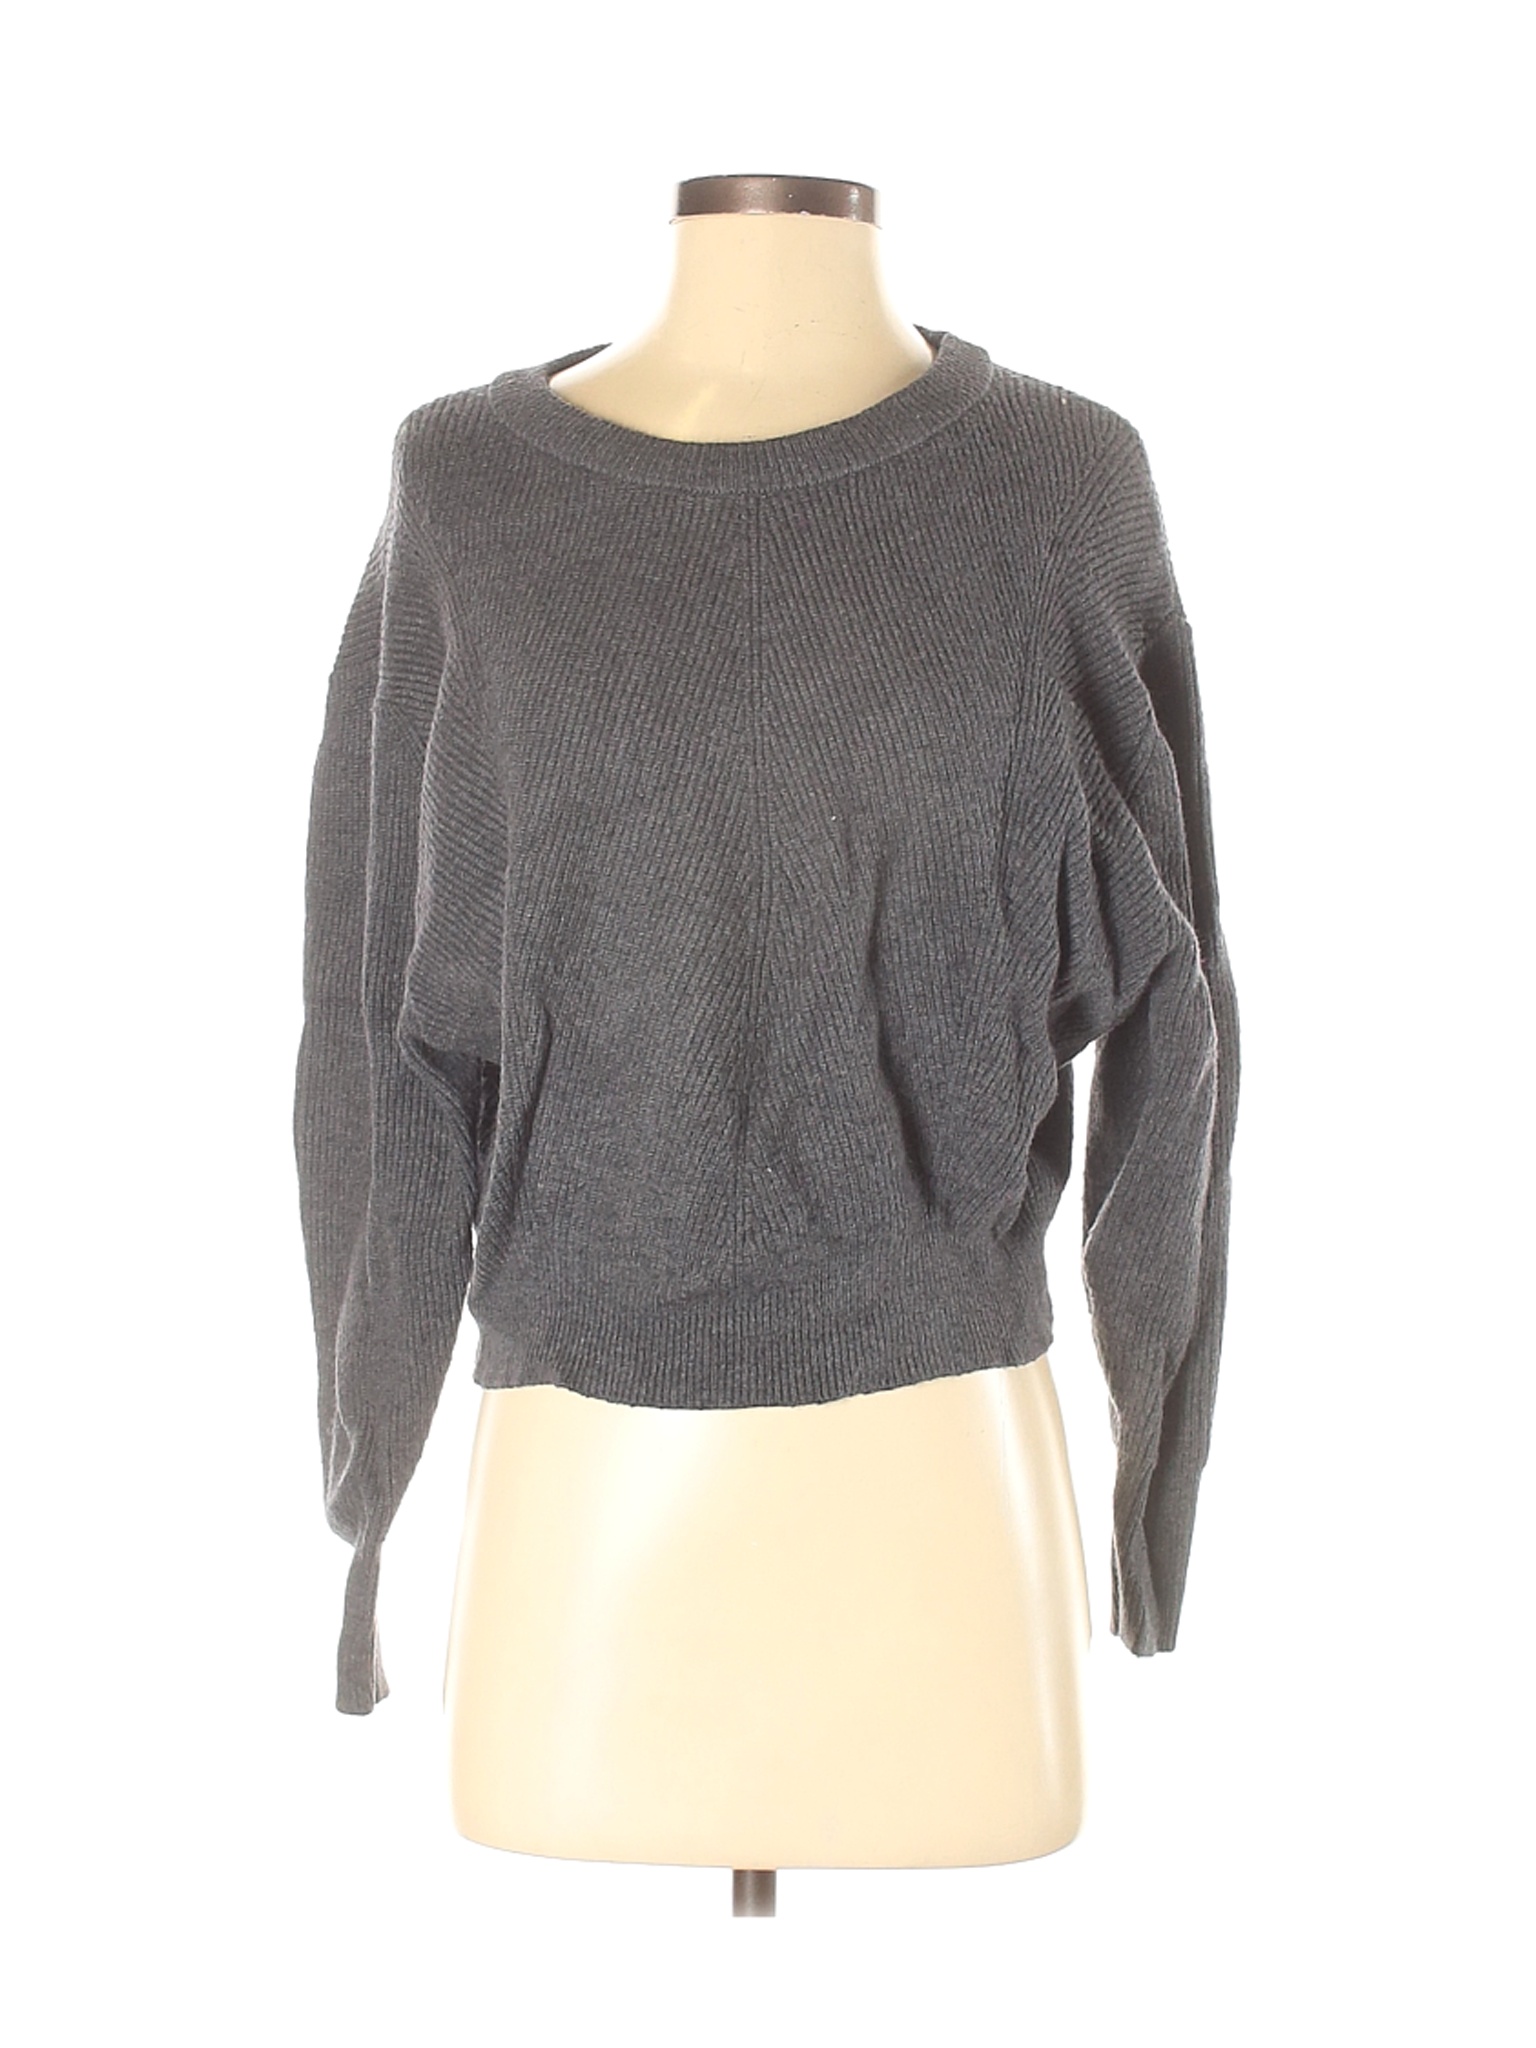 Zara Women Gray Pullover Sweater S | eBay